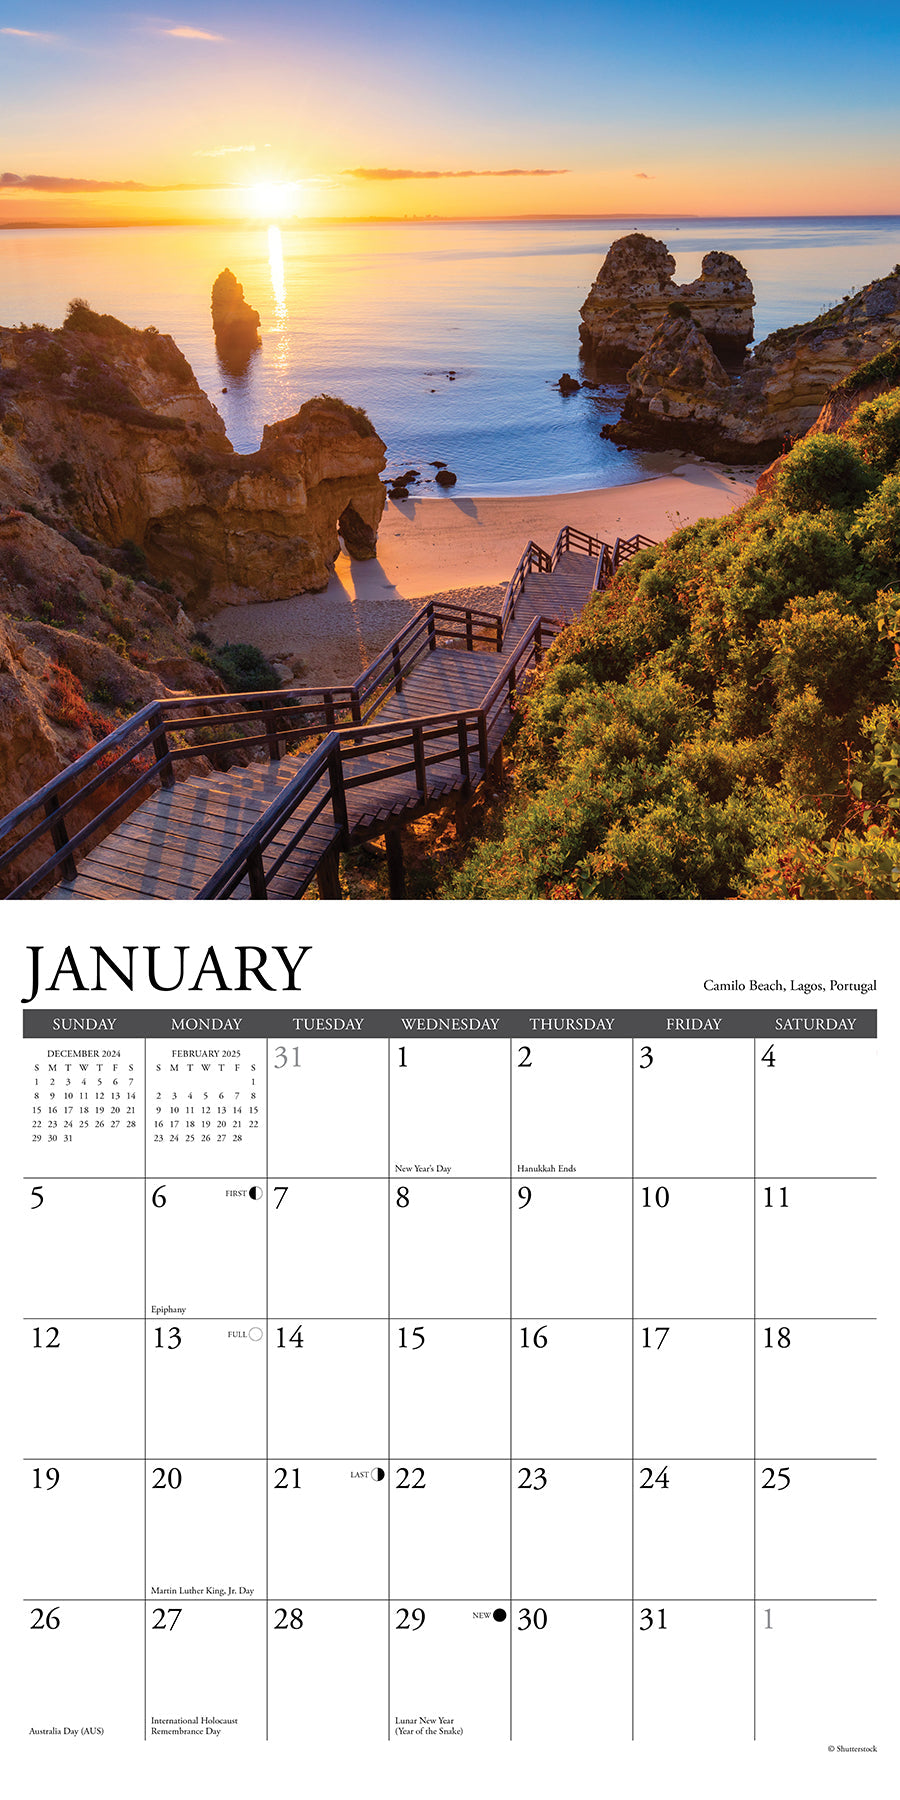 2025 Sunrise, Sunset - Square Wall Calendar